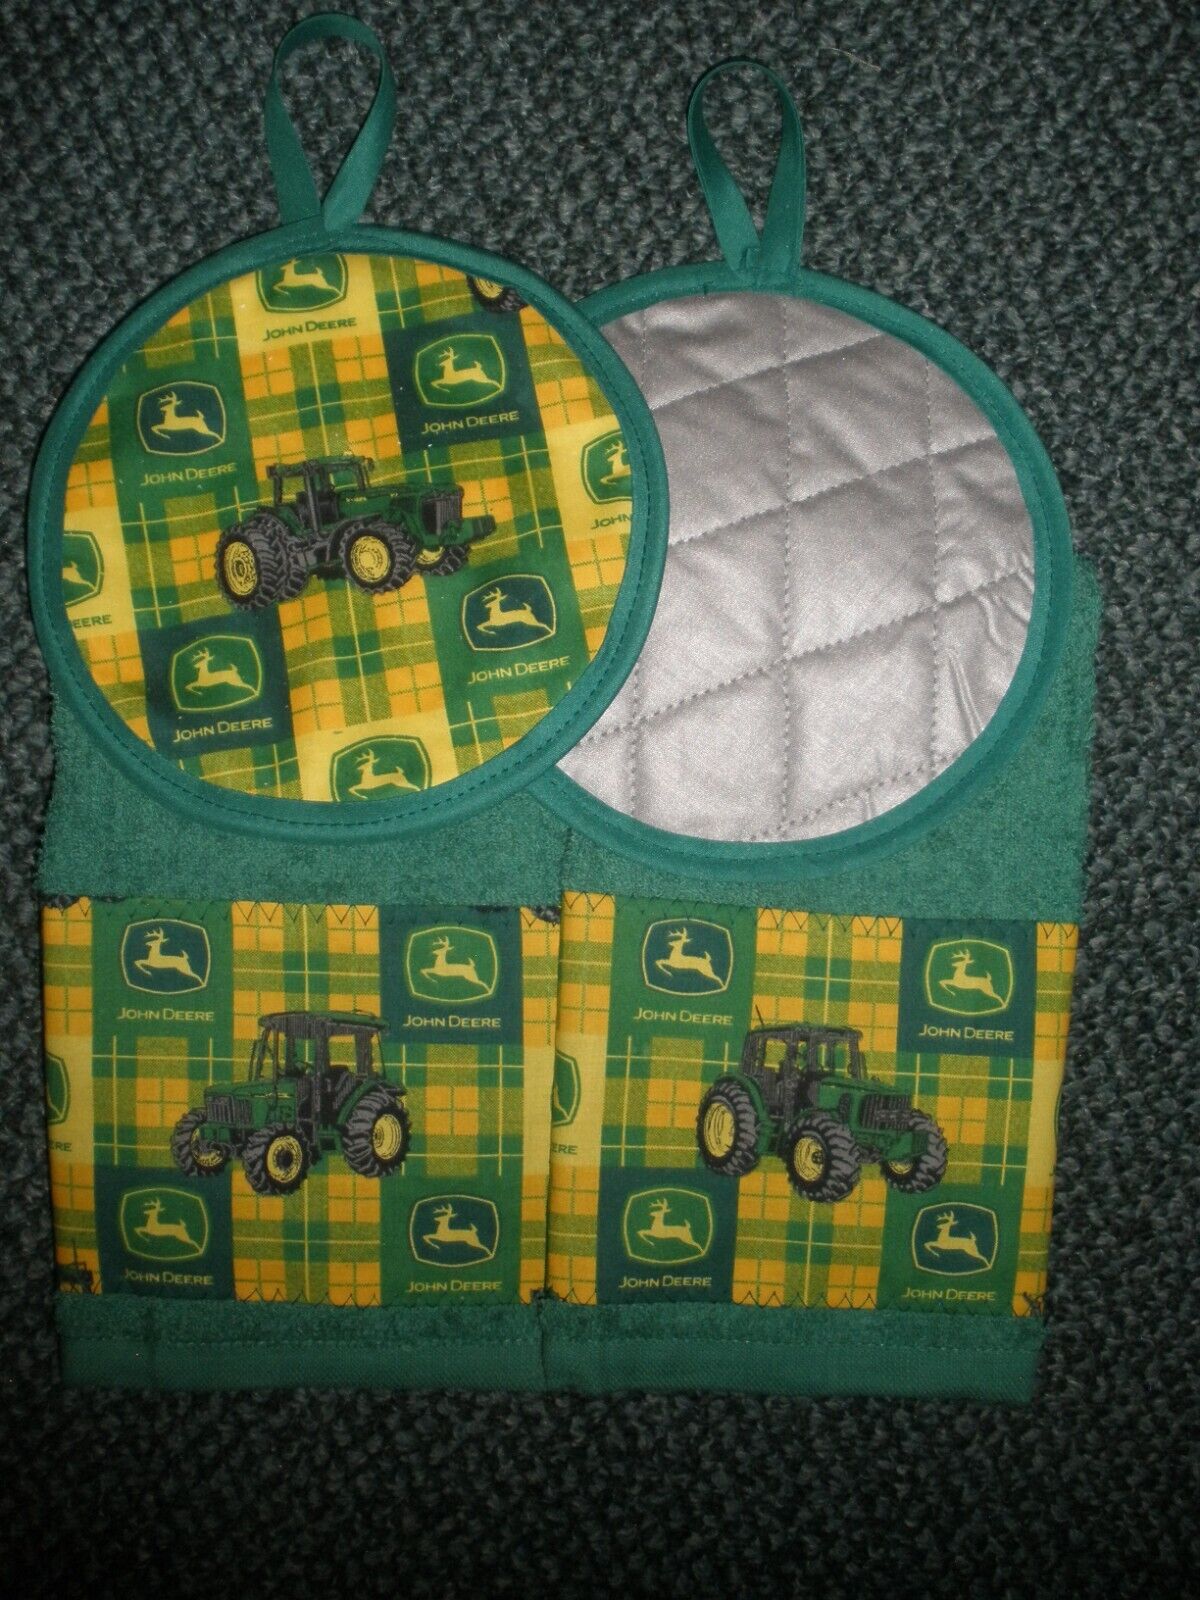 John Deere tractor plaid kitchen towels and potholders